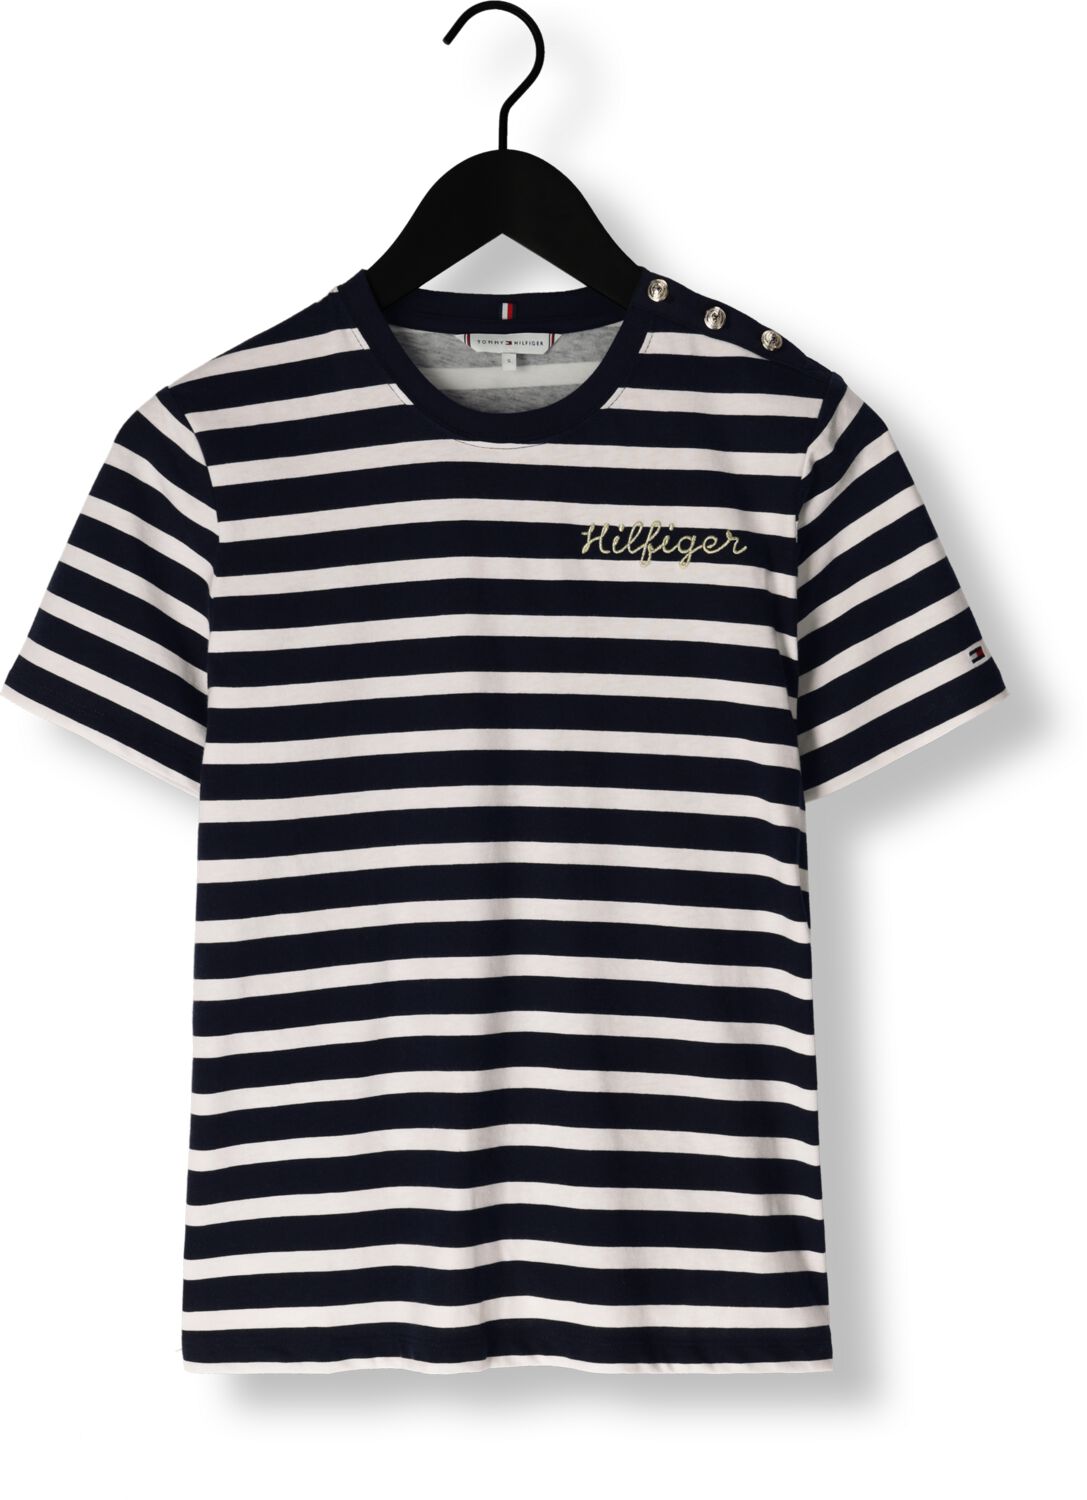 TOMMY HILFIGER Dames Tops & T-shirts Reg Gold Button C-nk Ss Blauw wit Gestreept